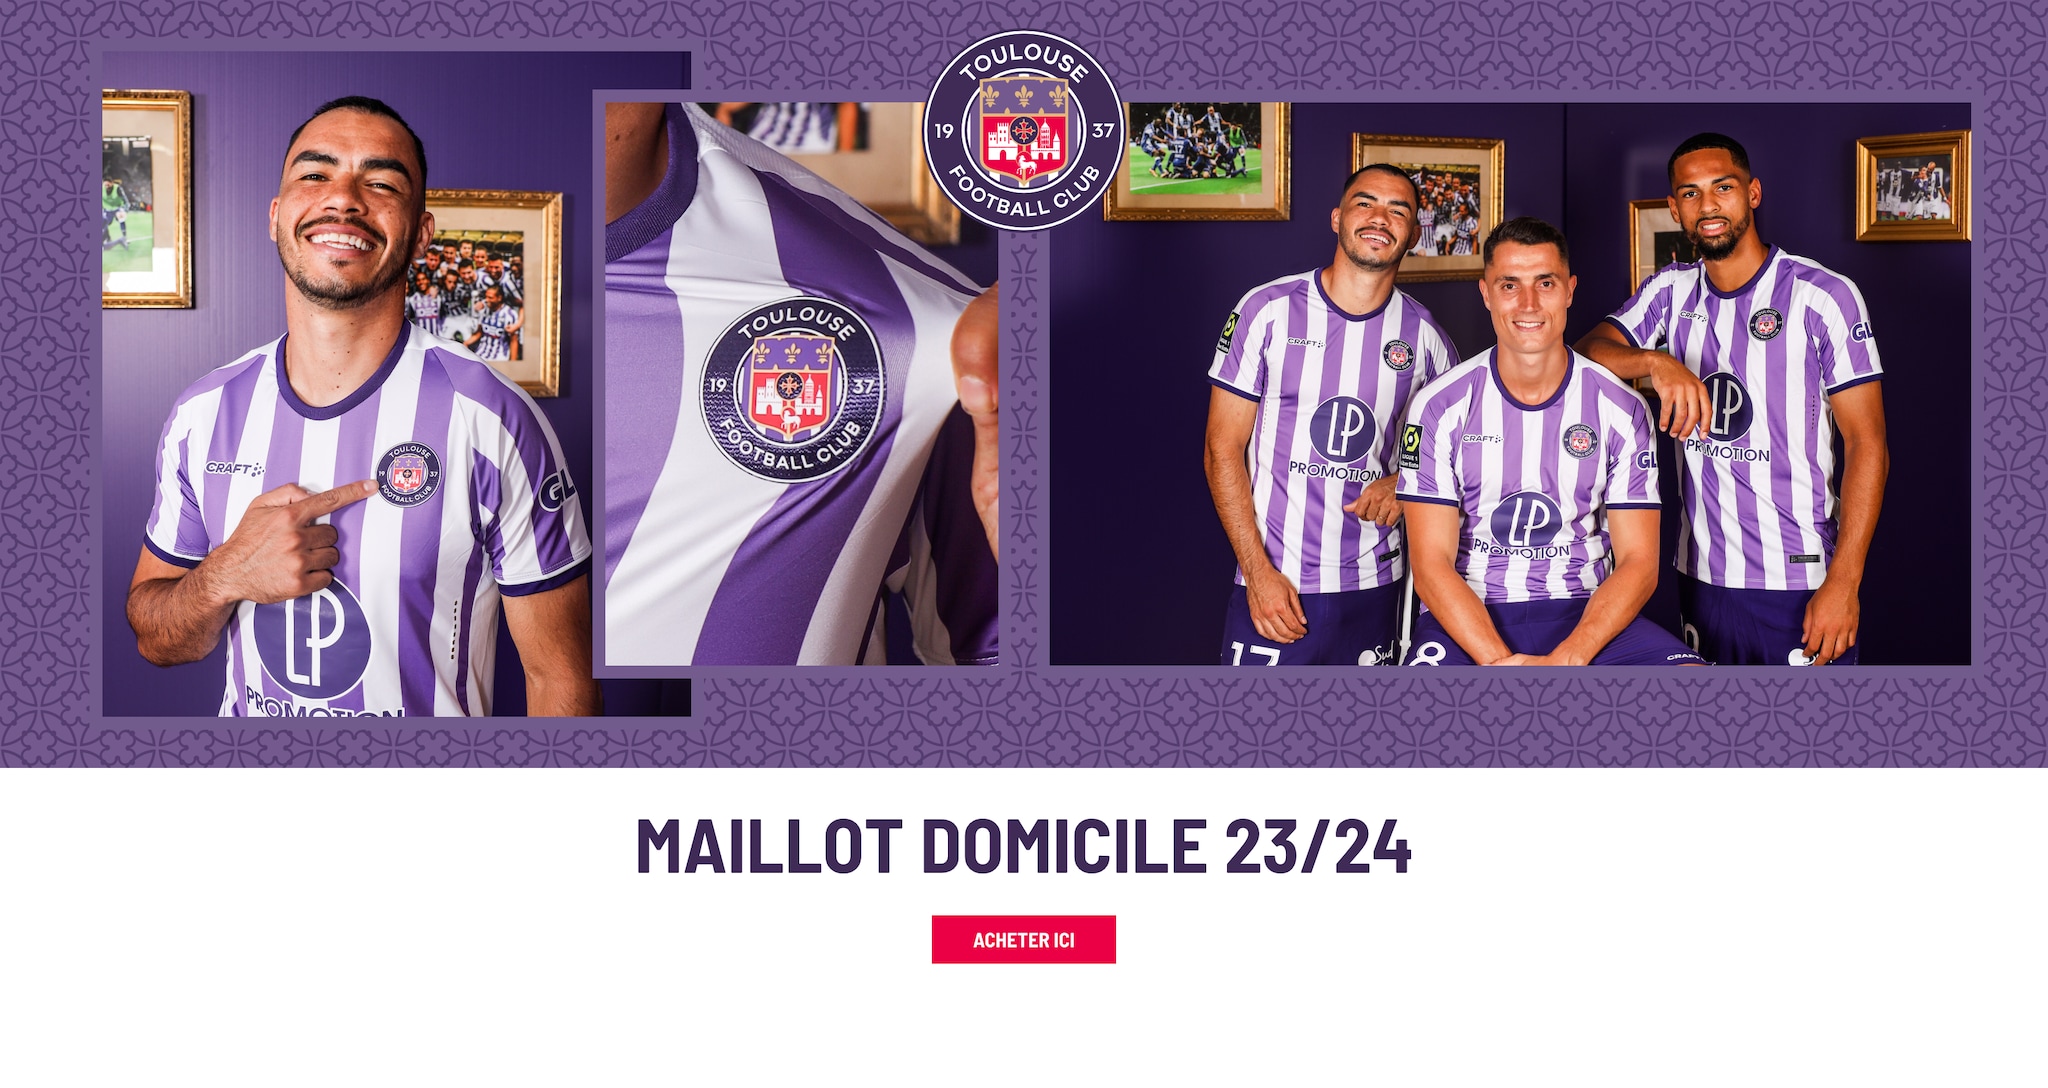 Maillot Domicile 23/24 - Acheter Ici